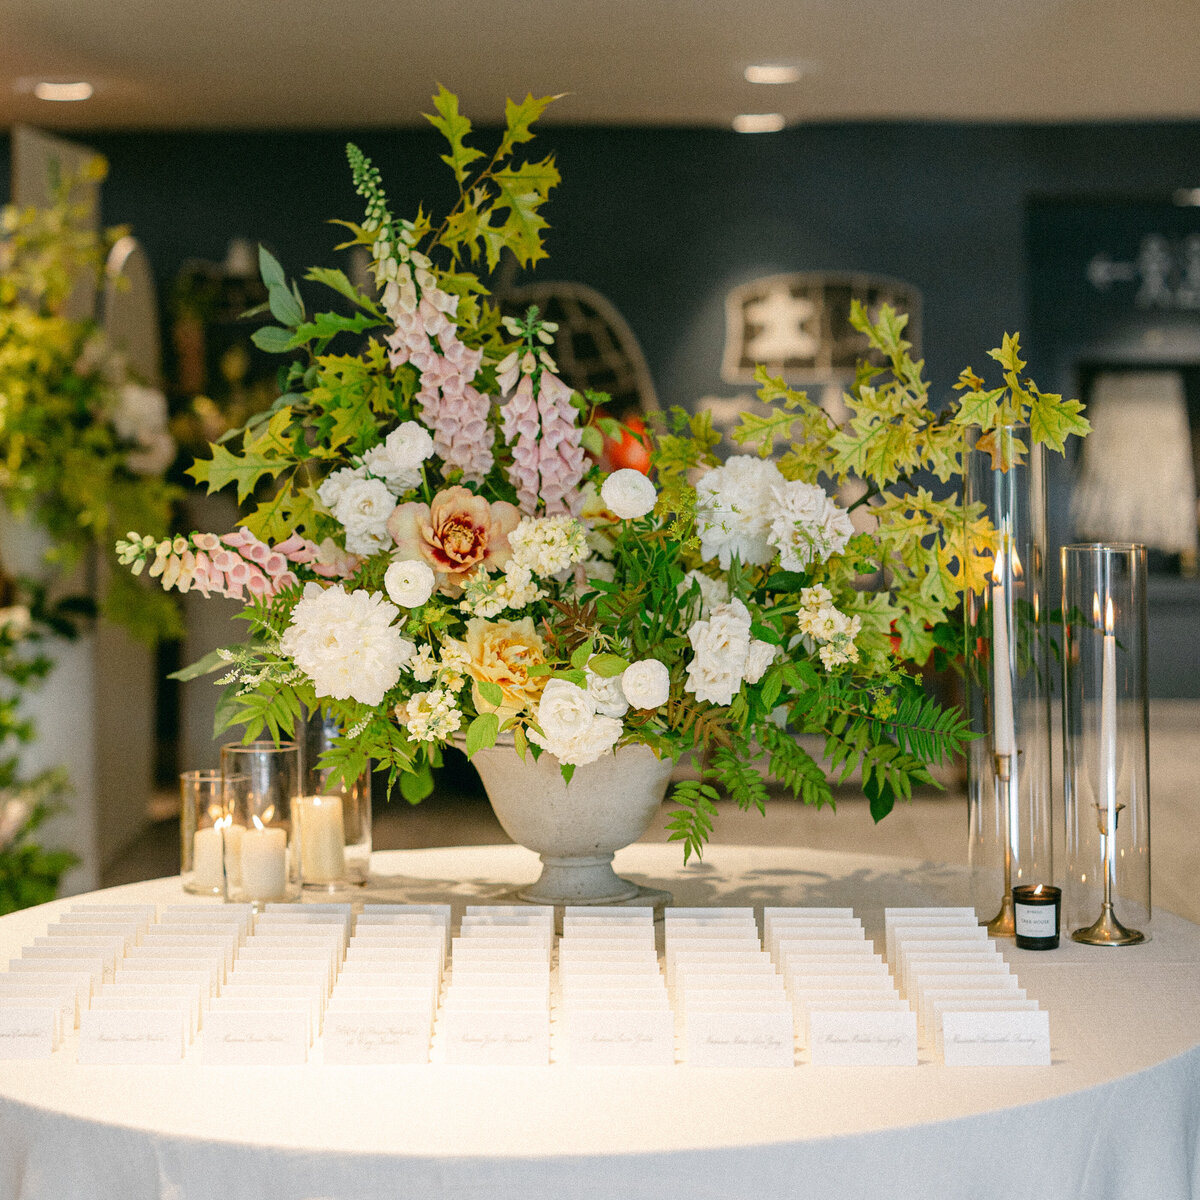 Atelier-Carmel-Wedding-Florist-GALLERY-Arrangements-22